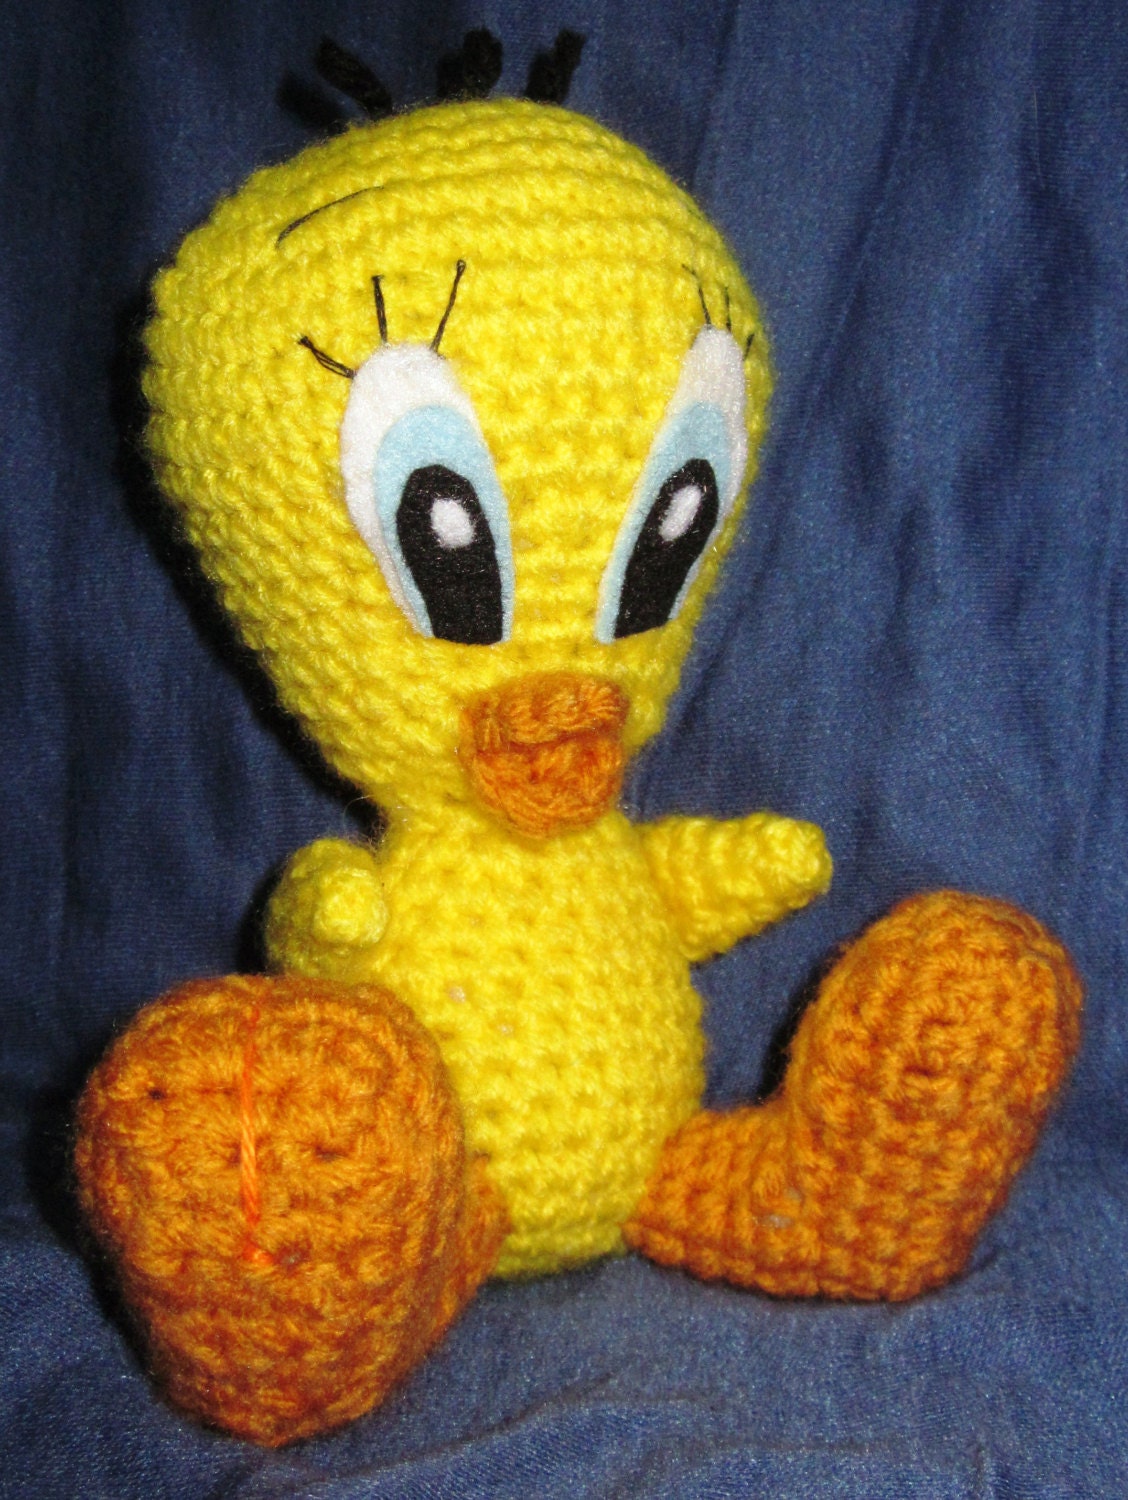 PATTERN: Tweety Bird Amigurumi crochet doll by JNArts on Etsy